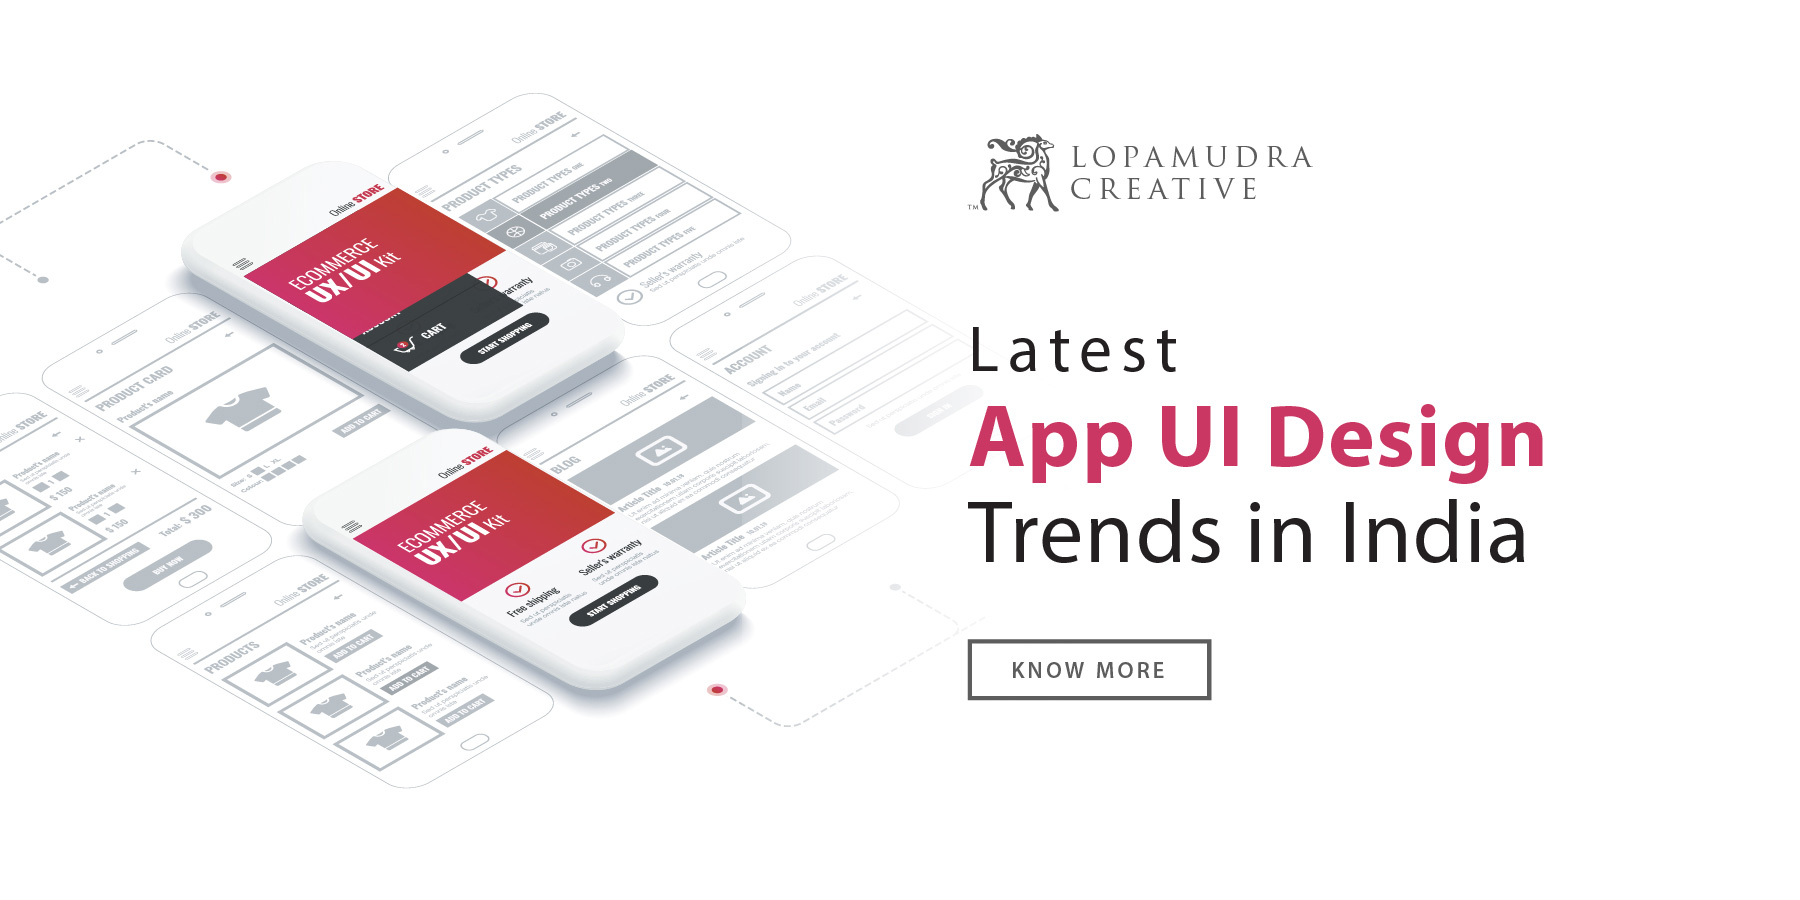 Latest app UI (user interface) design trends in India